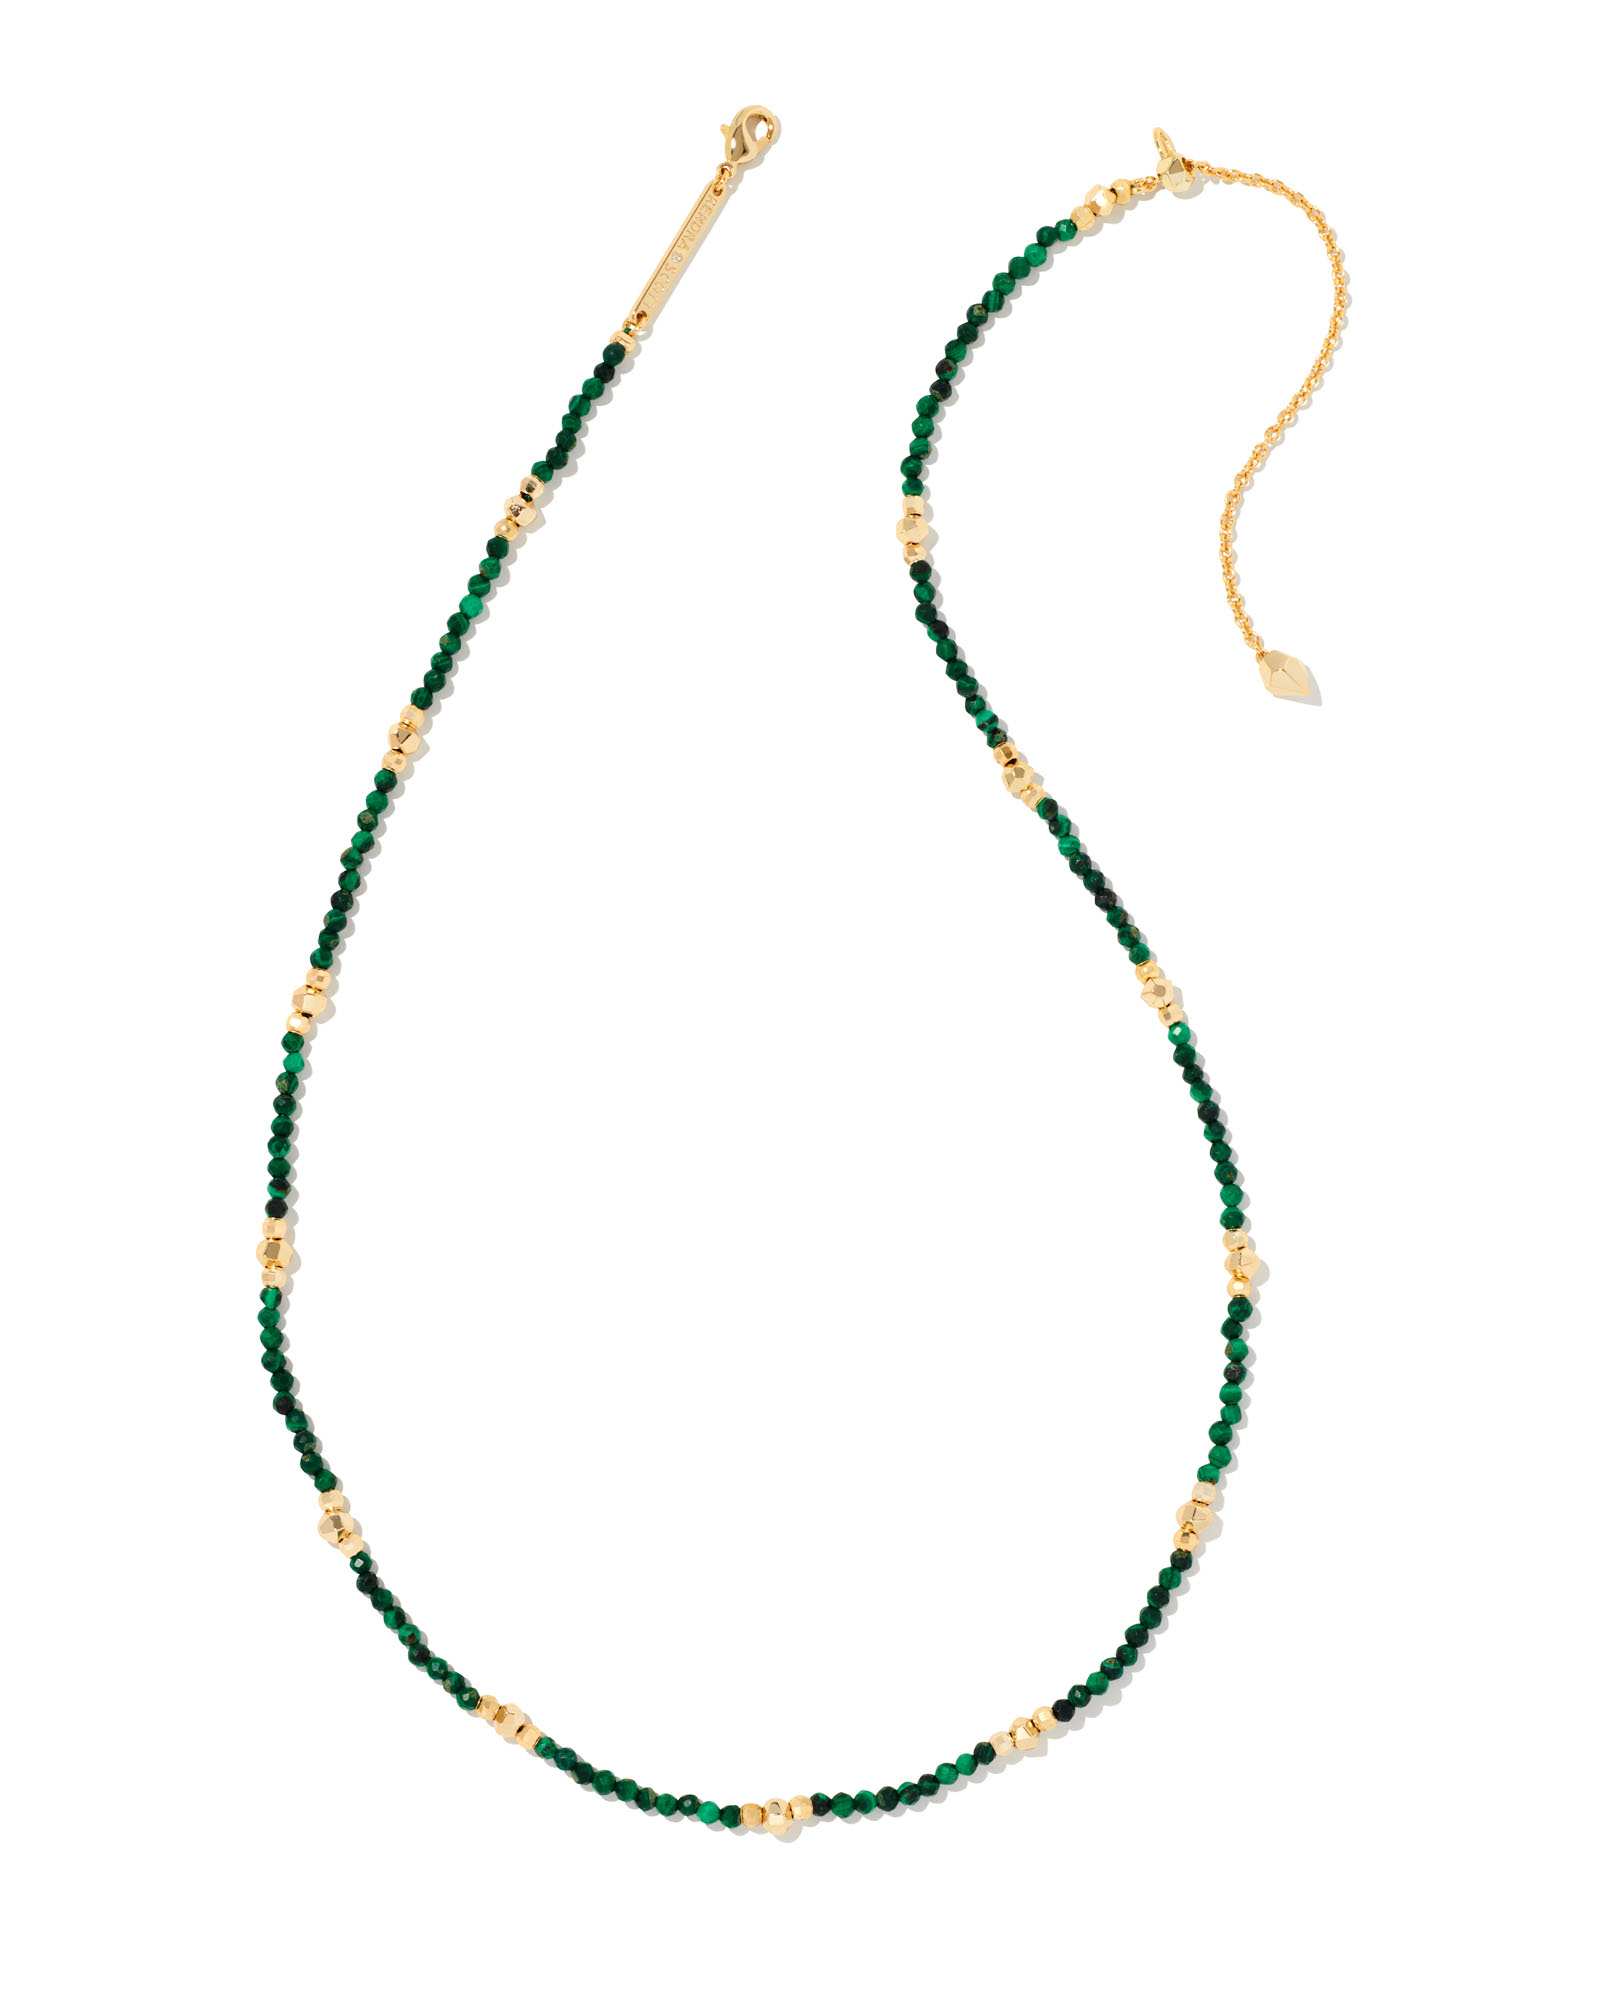 Britt Gold Choker Necklace in Green Malachite | Kendra Scott